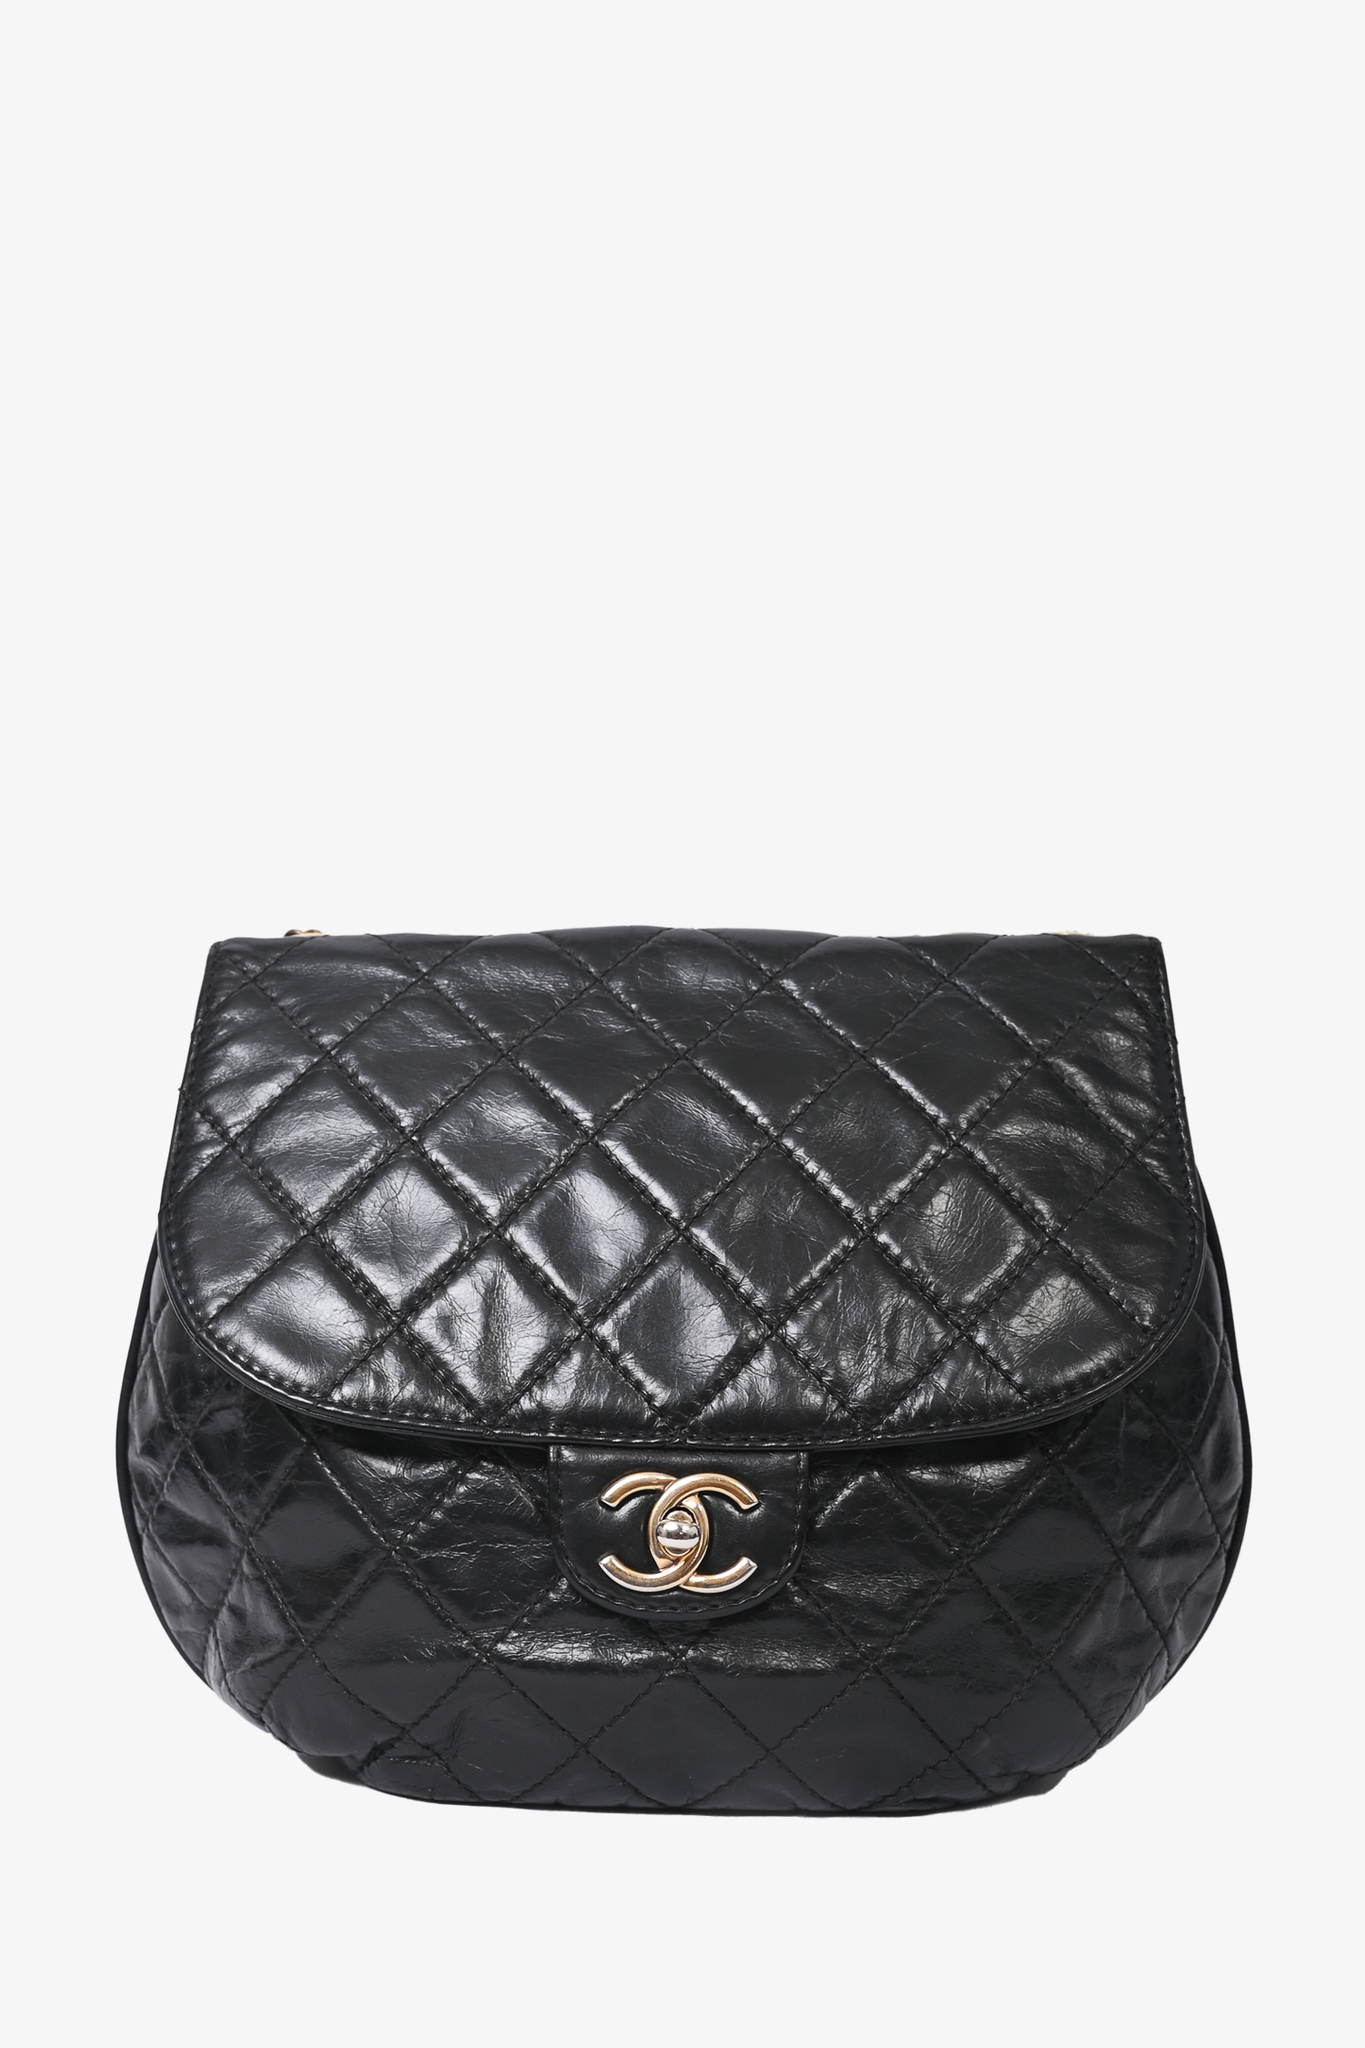 Chanel 2015 Cruise Collection Black Calfskin Leather 'Dubai' Flap Bag w/ GHW